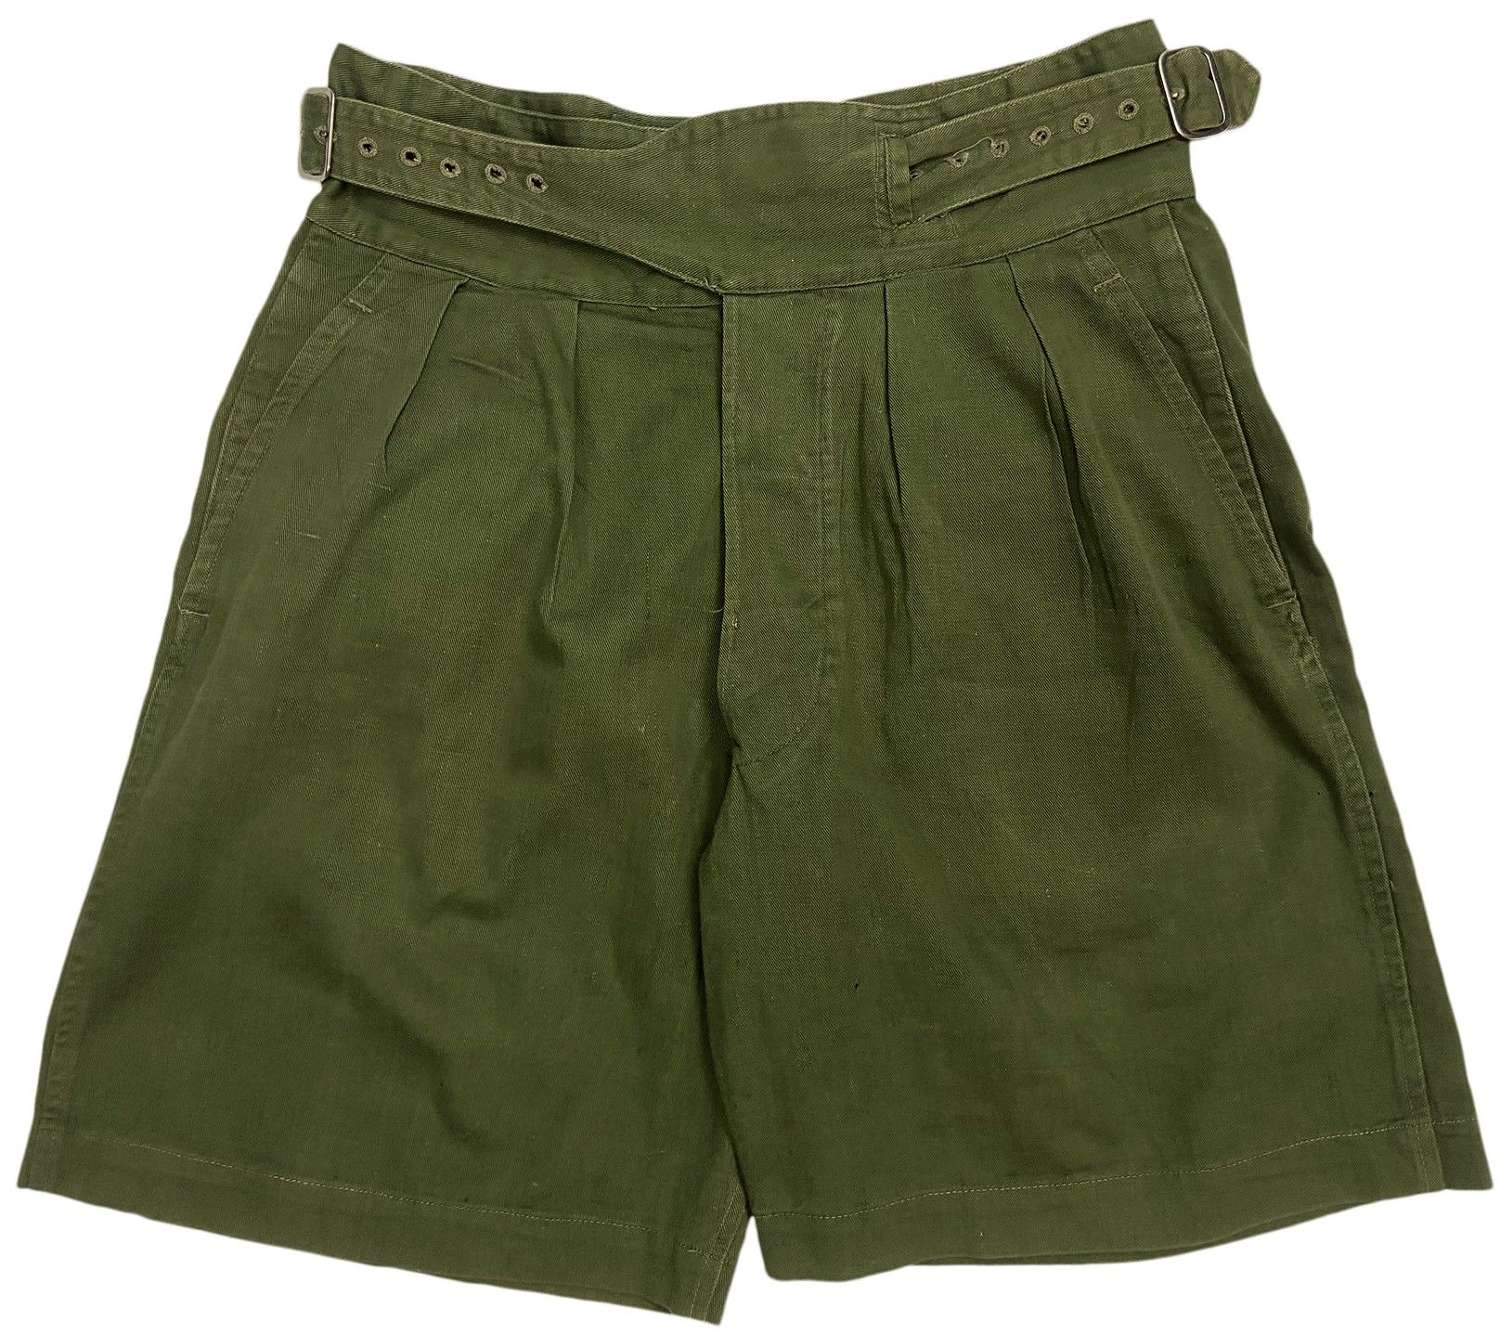 Original 1952 Dated 1950 Pattern Jungle Green Shorts - Size 4